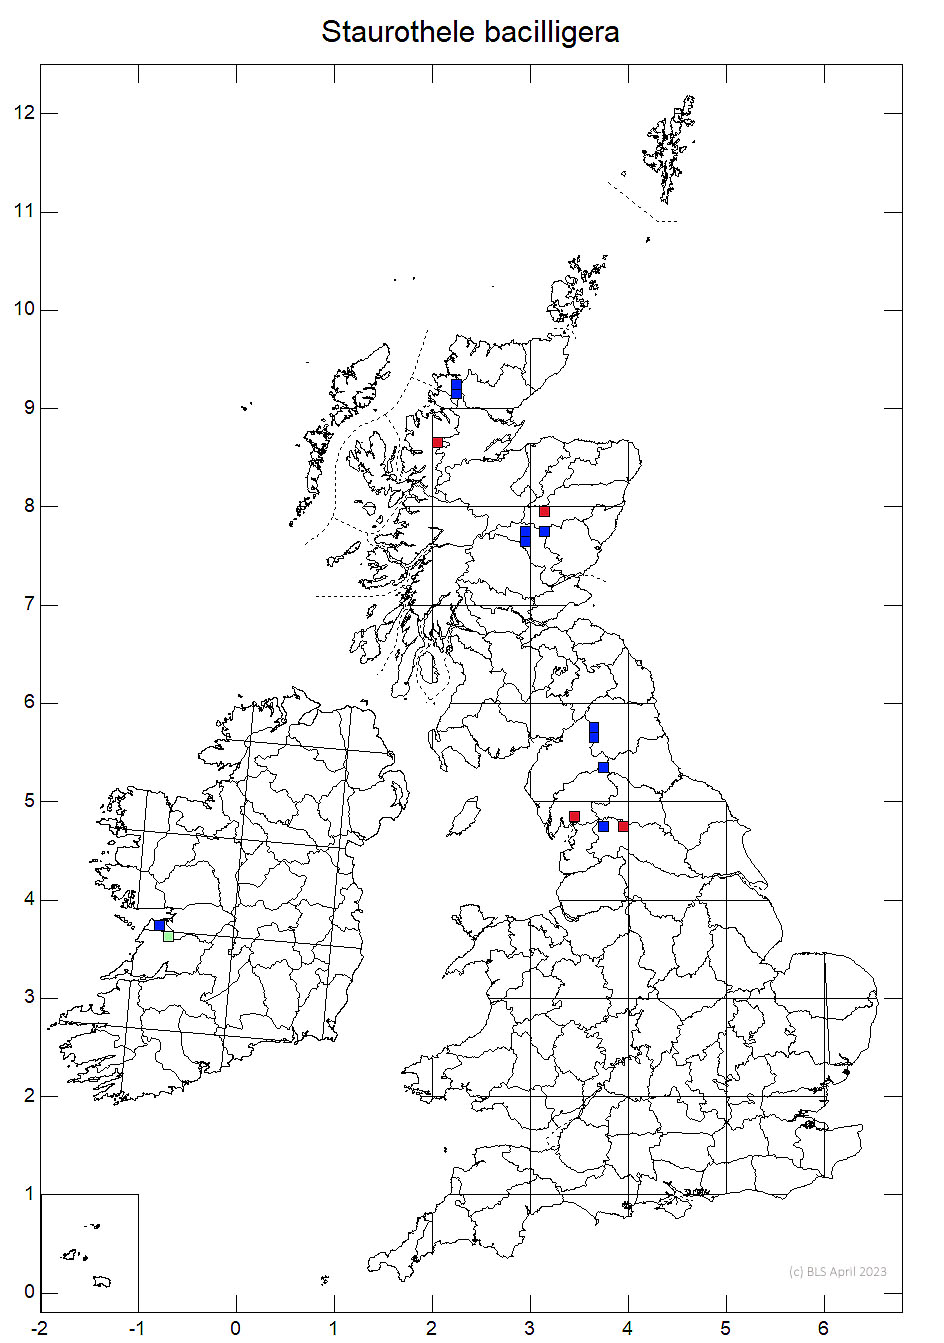 Staurothele bacilligera 10km sq distribution map